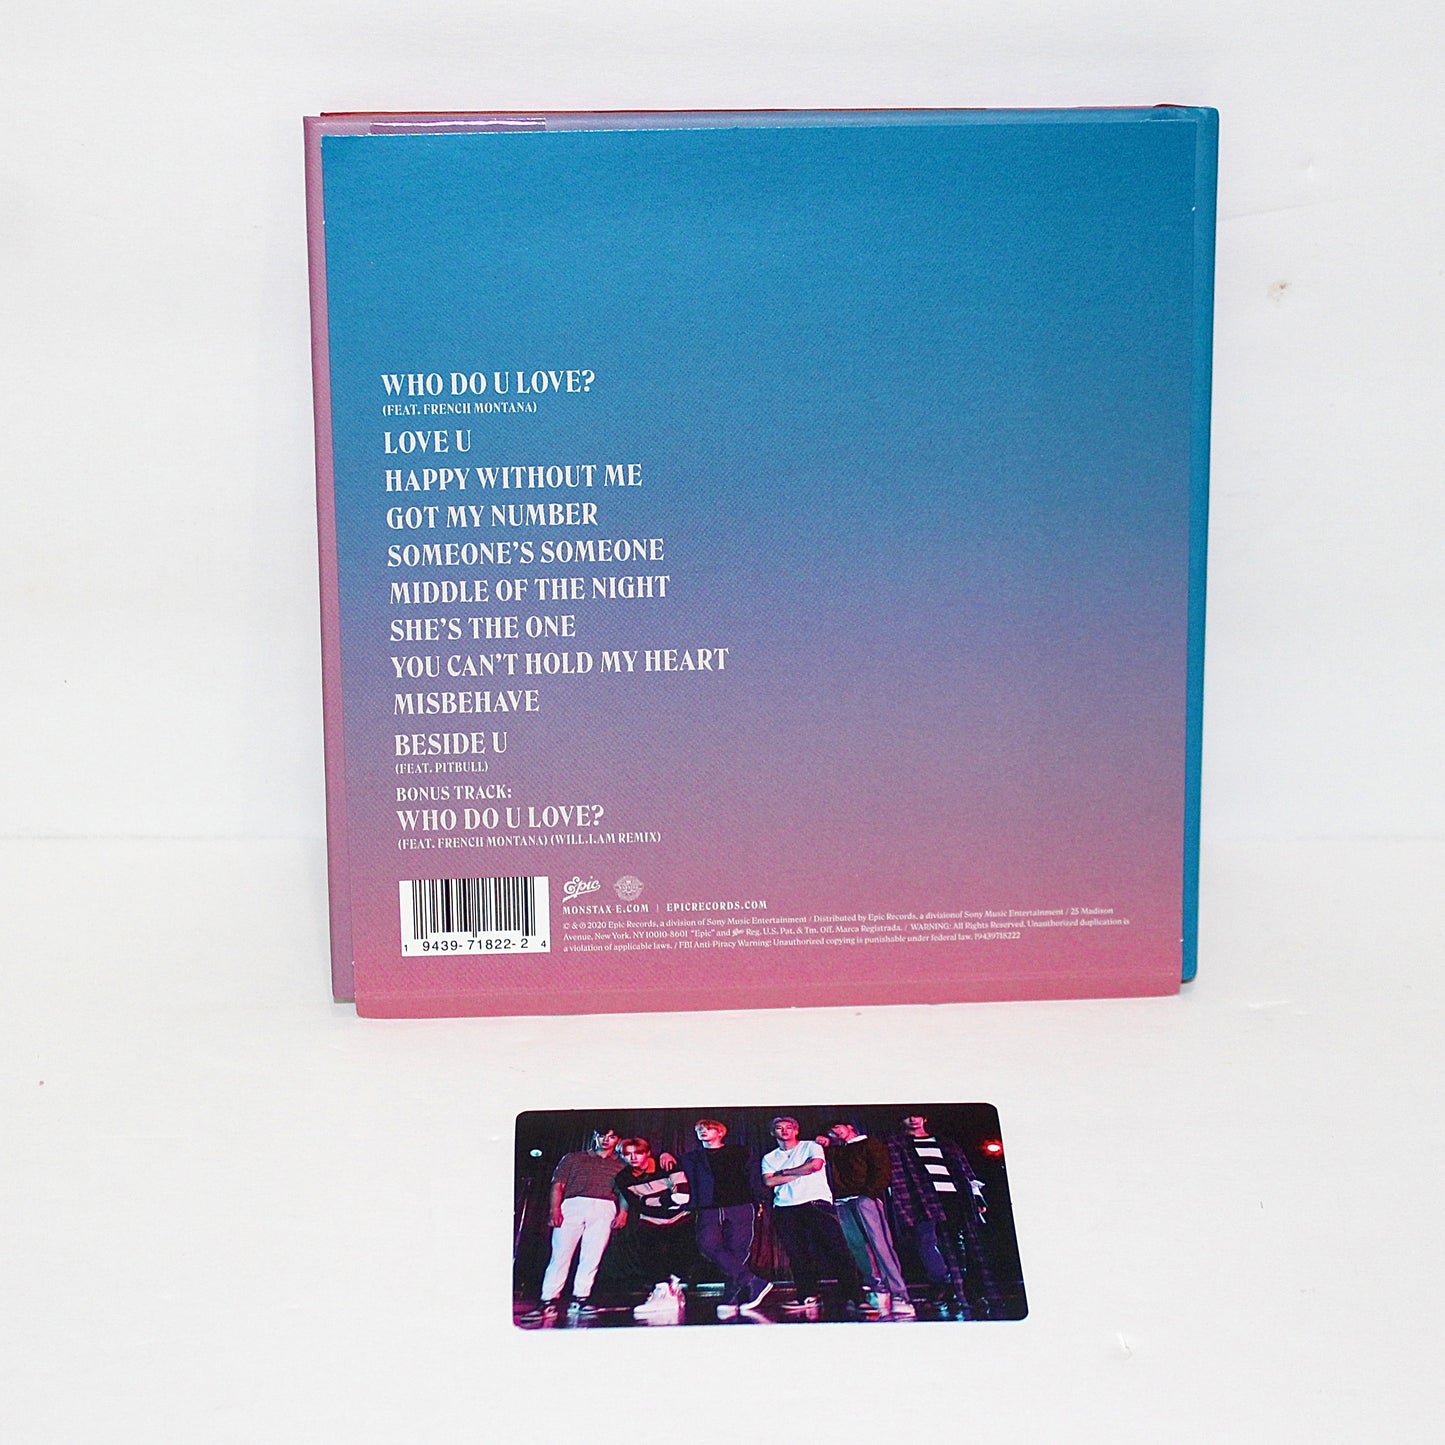 MONSTA X 1st English Album: All About Luv | Hardcover Full Album Art Version | Ver 1